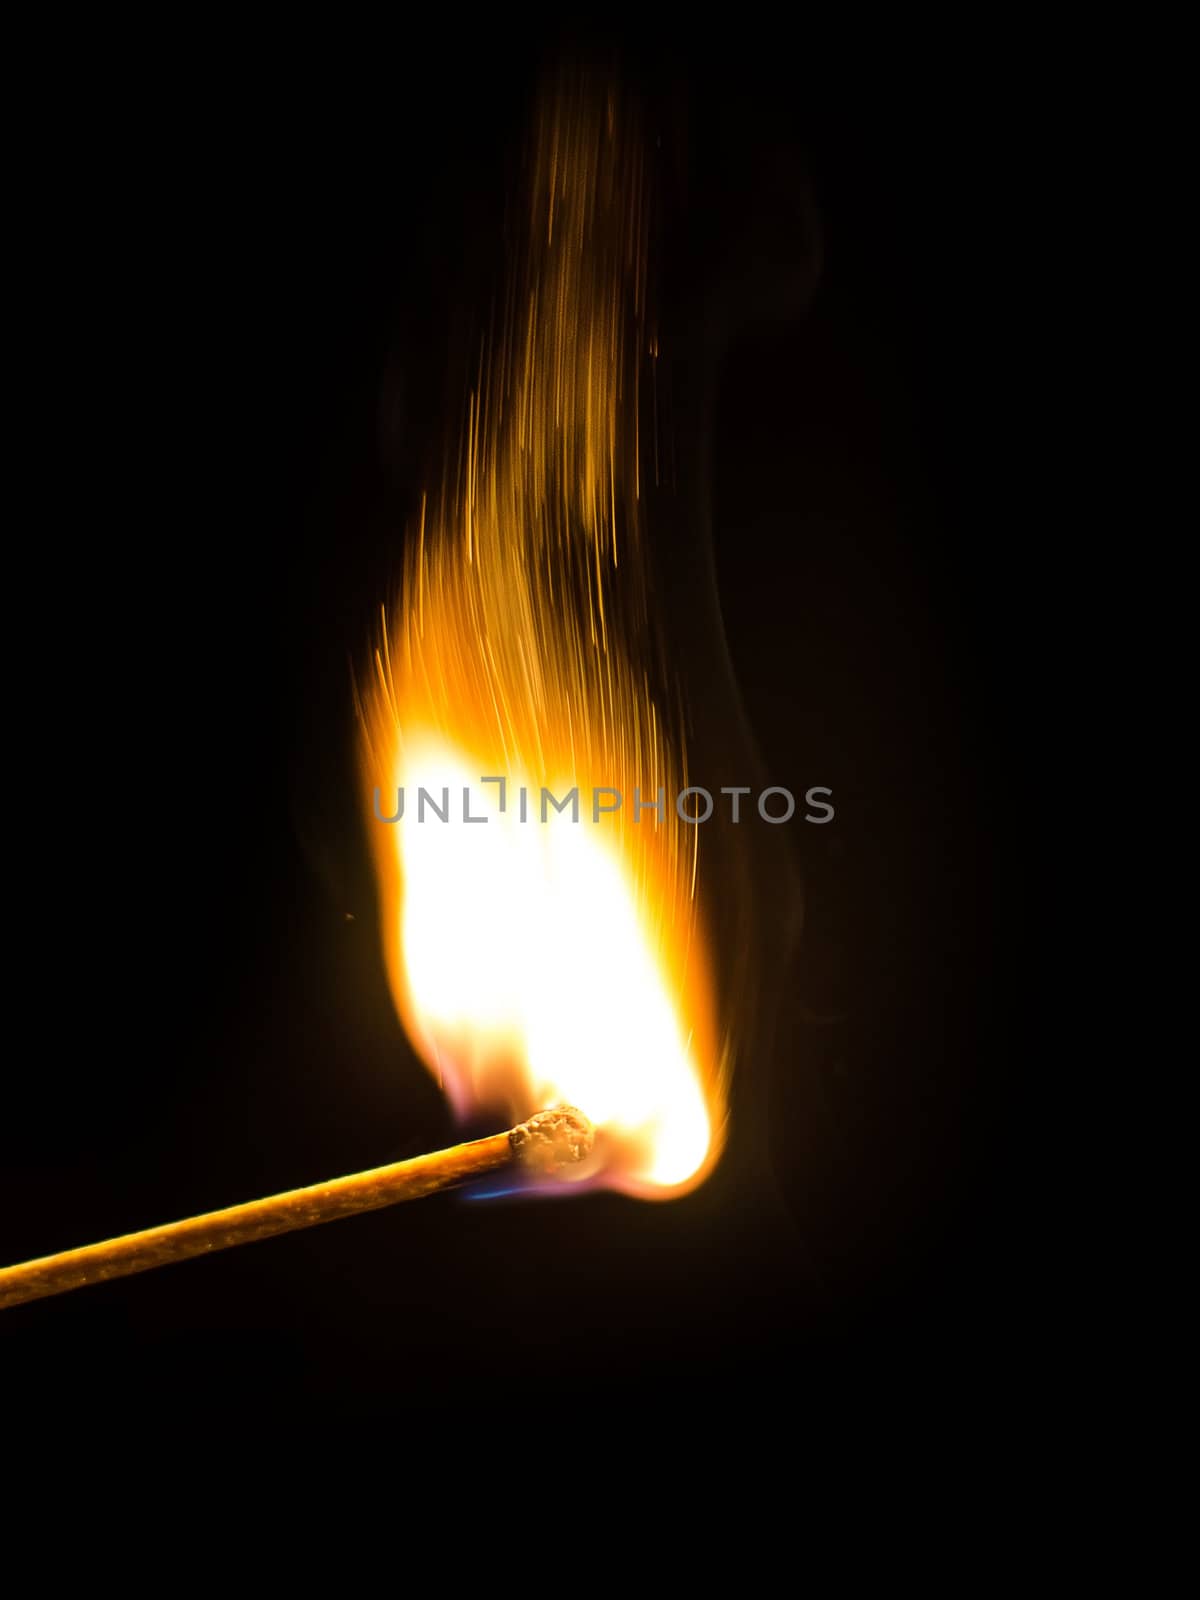 Burning match over black background by dmitrimaruta